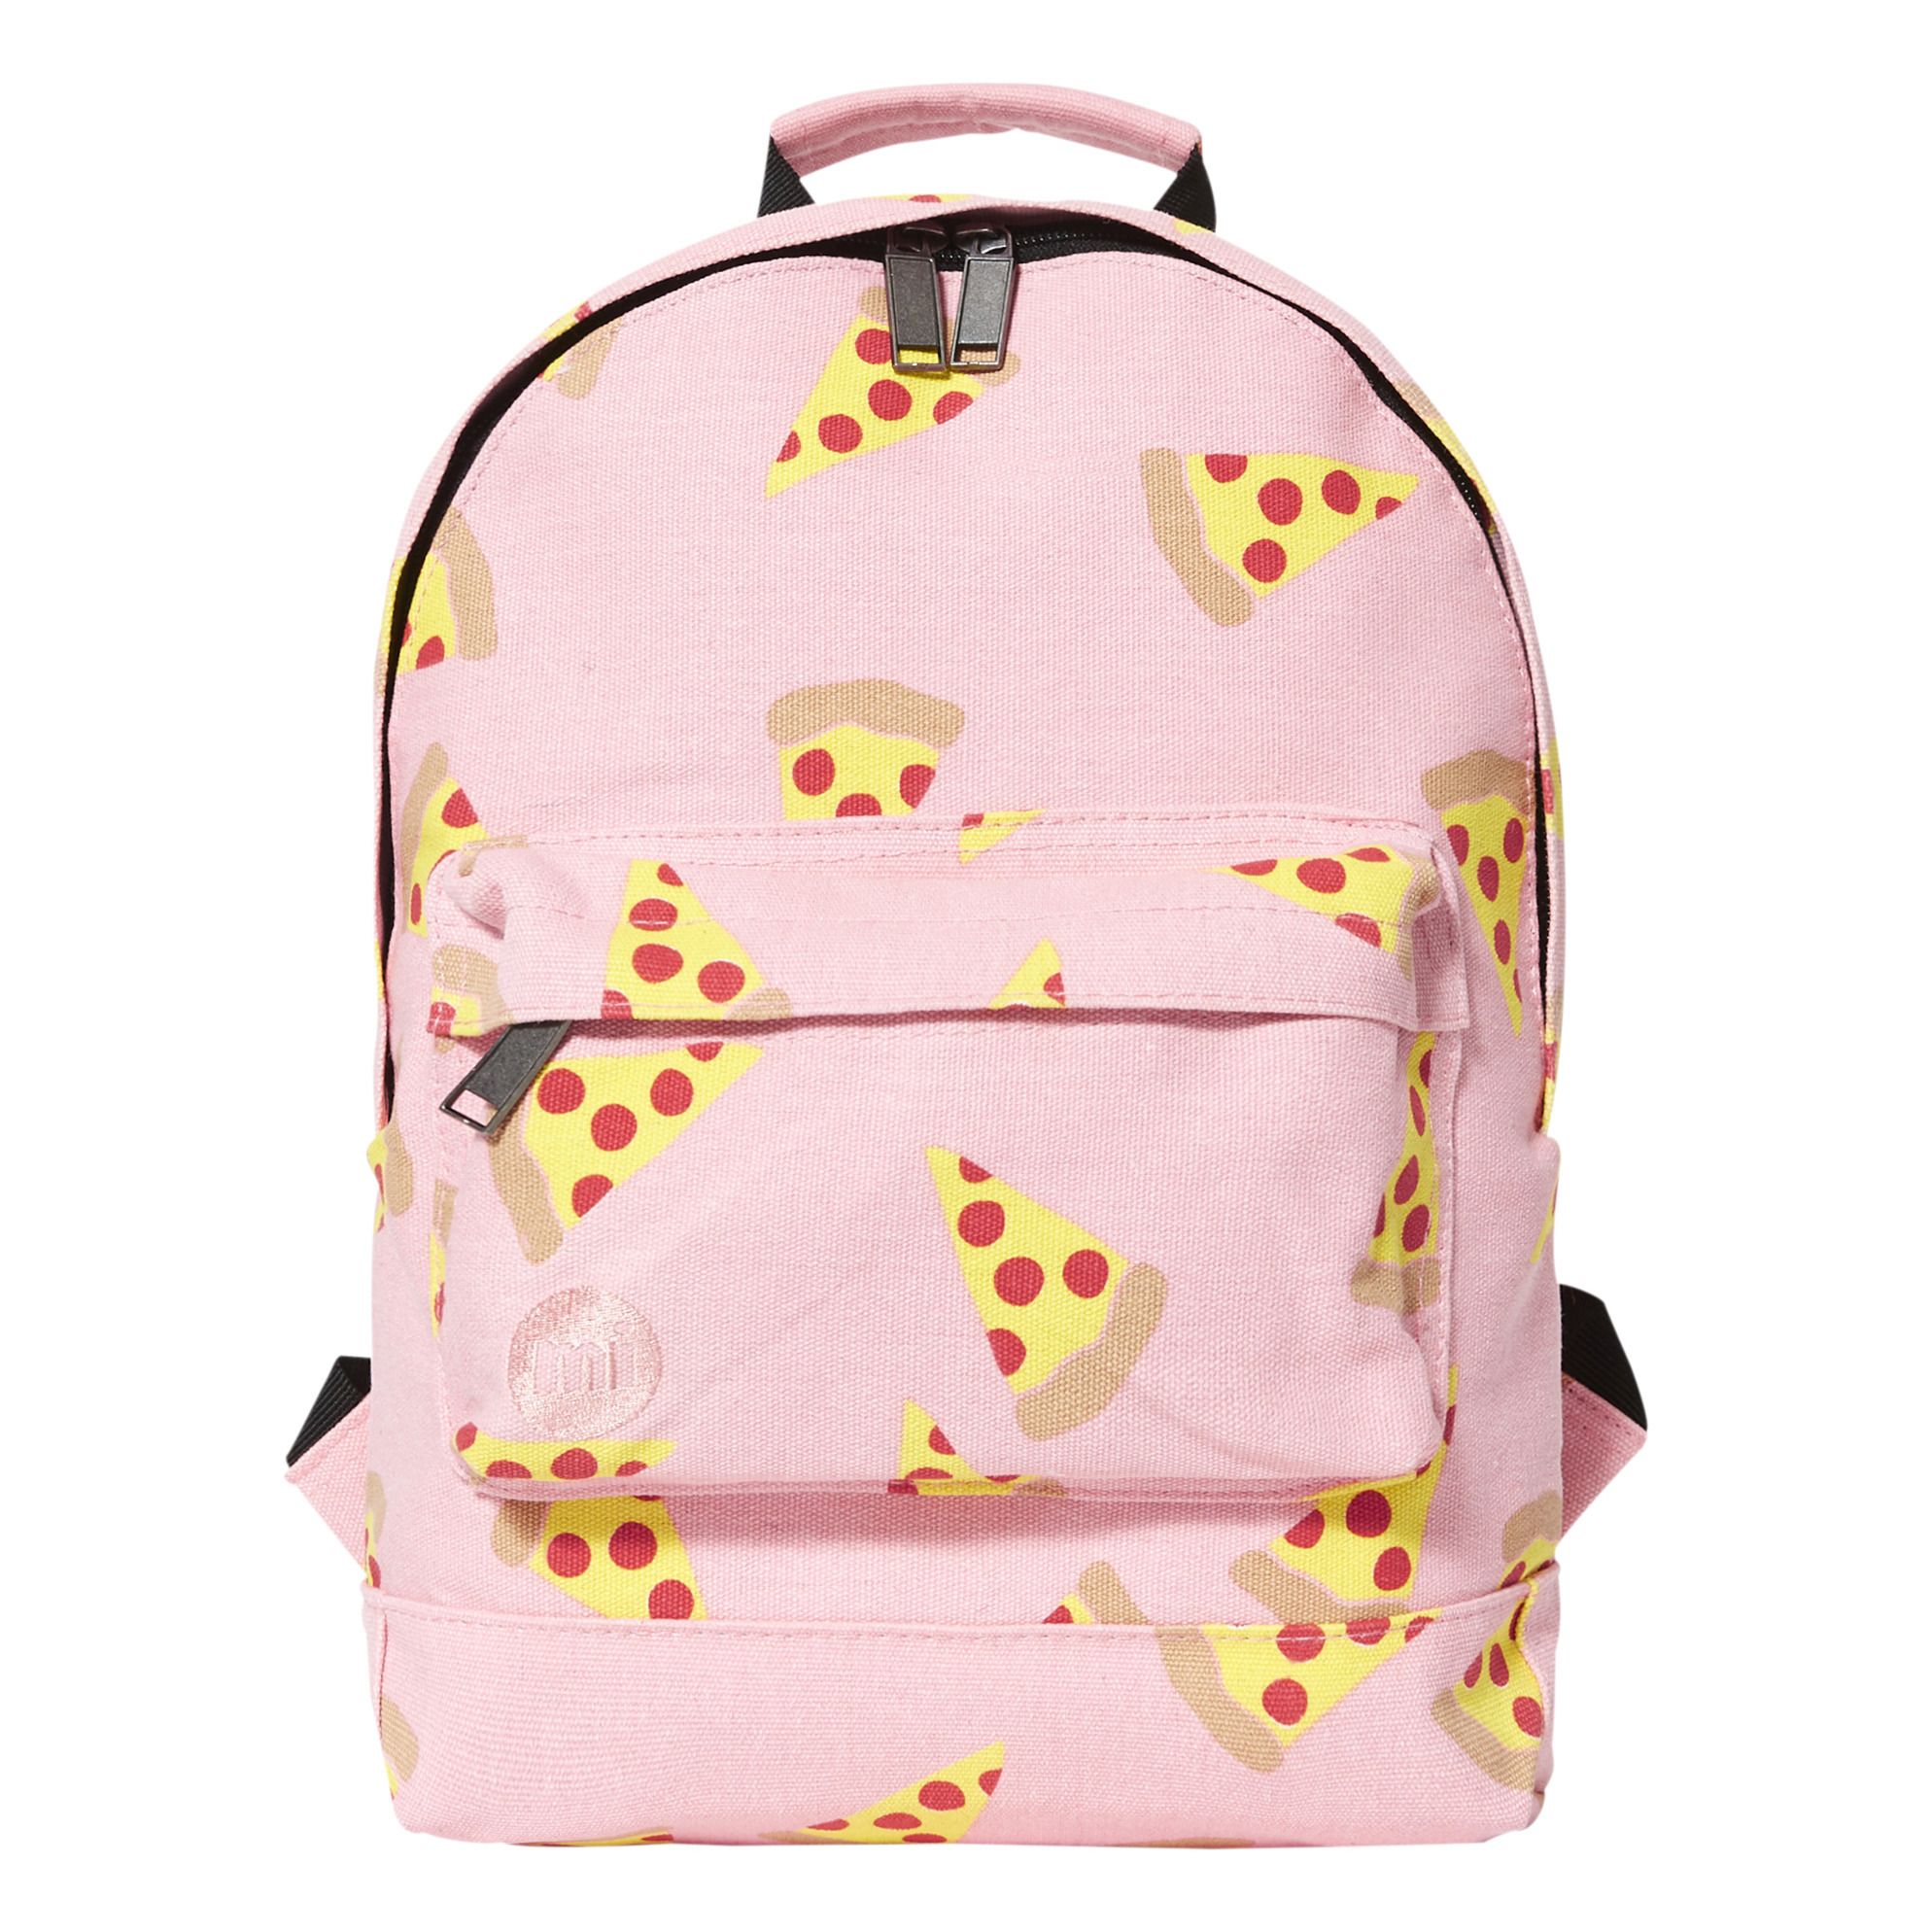 Mi-Pac - Sac Mini Backpack - Fille - Rose